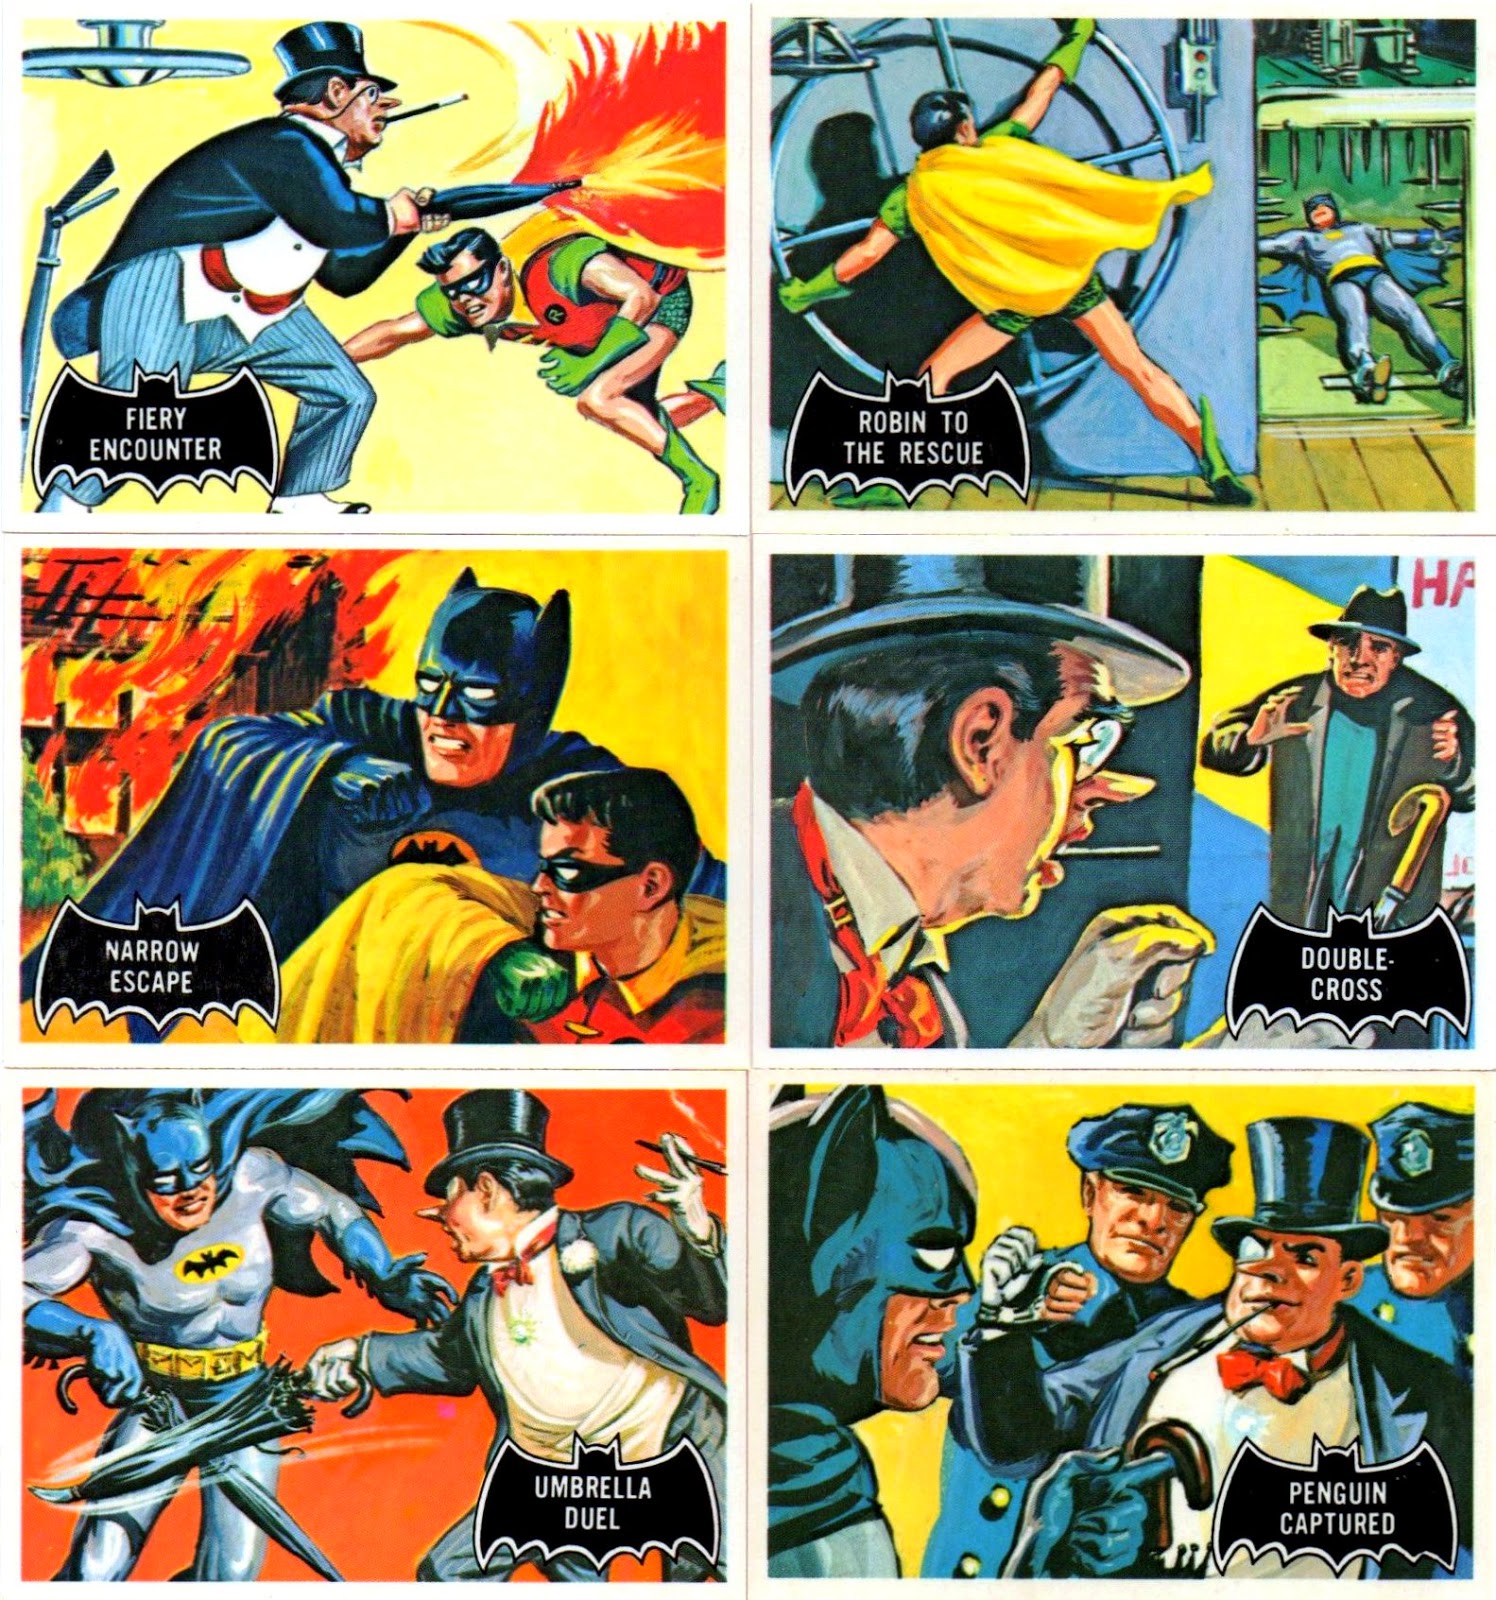 CRIVENS! COMICS & STUFF!: PART FOUR OF TOPPS 1966 BATMAN CARDS...